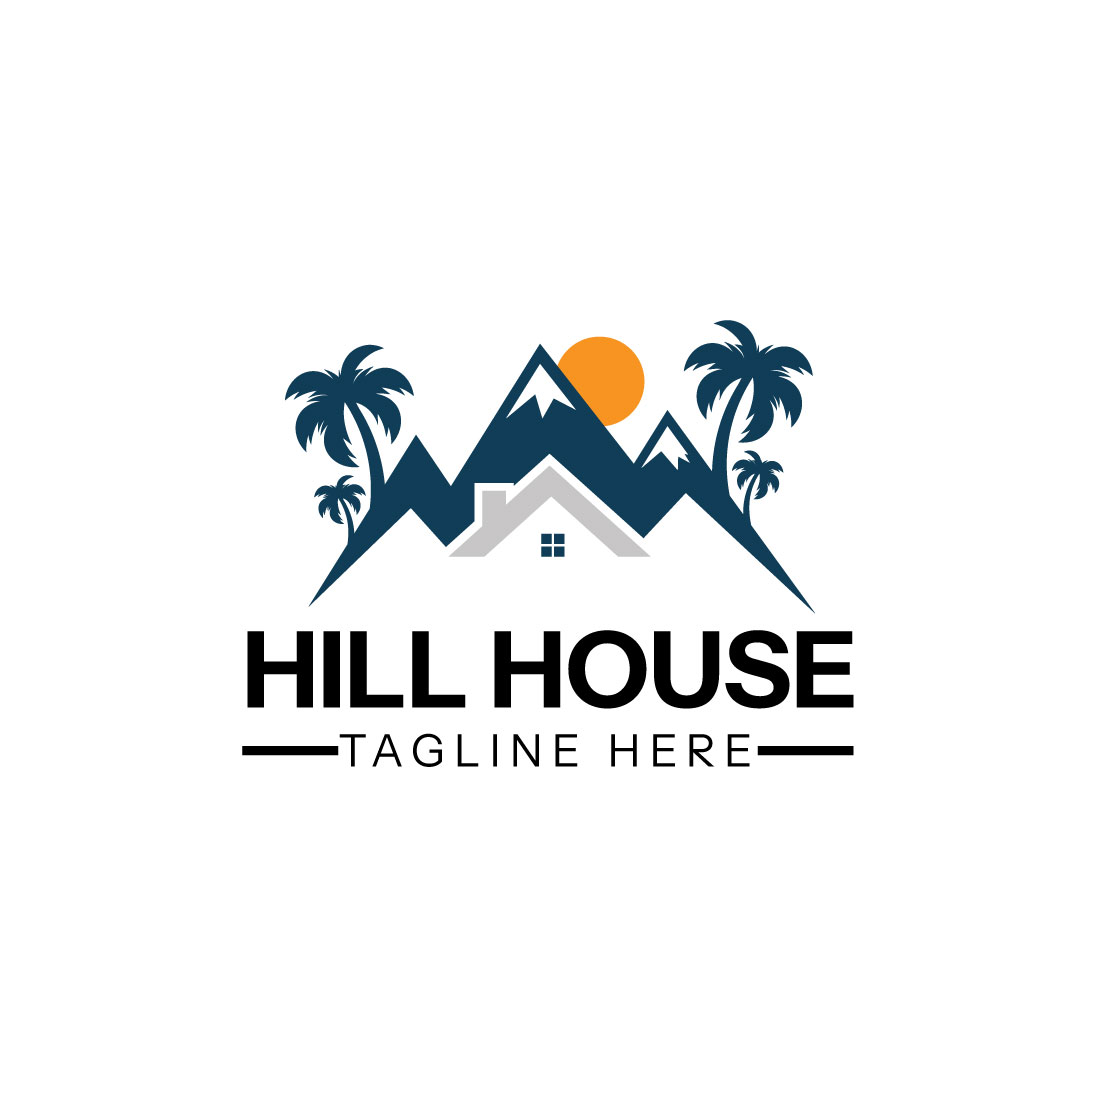 Nature Mountain house logo inspiration, hill real estate logo design vector preview image.